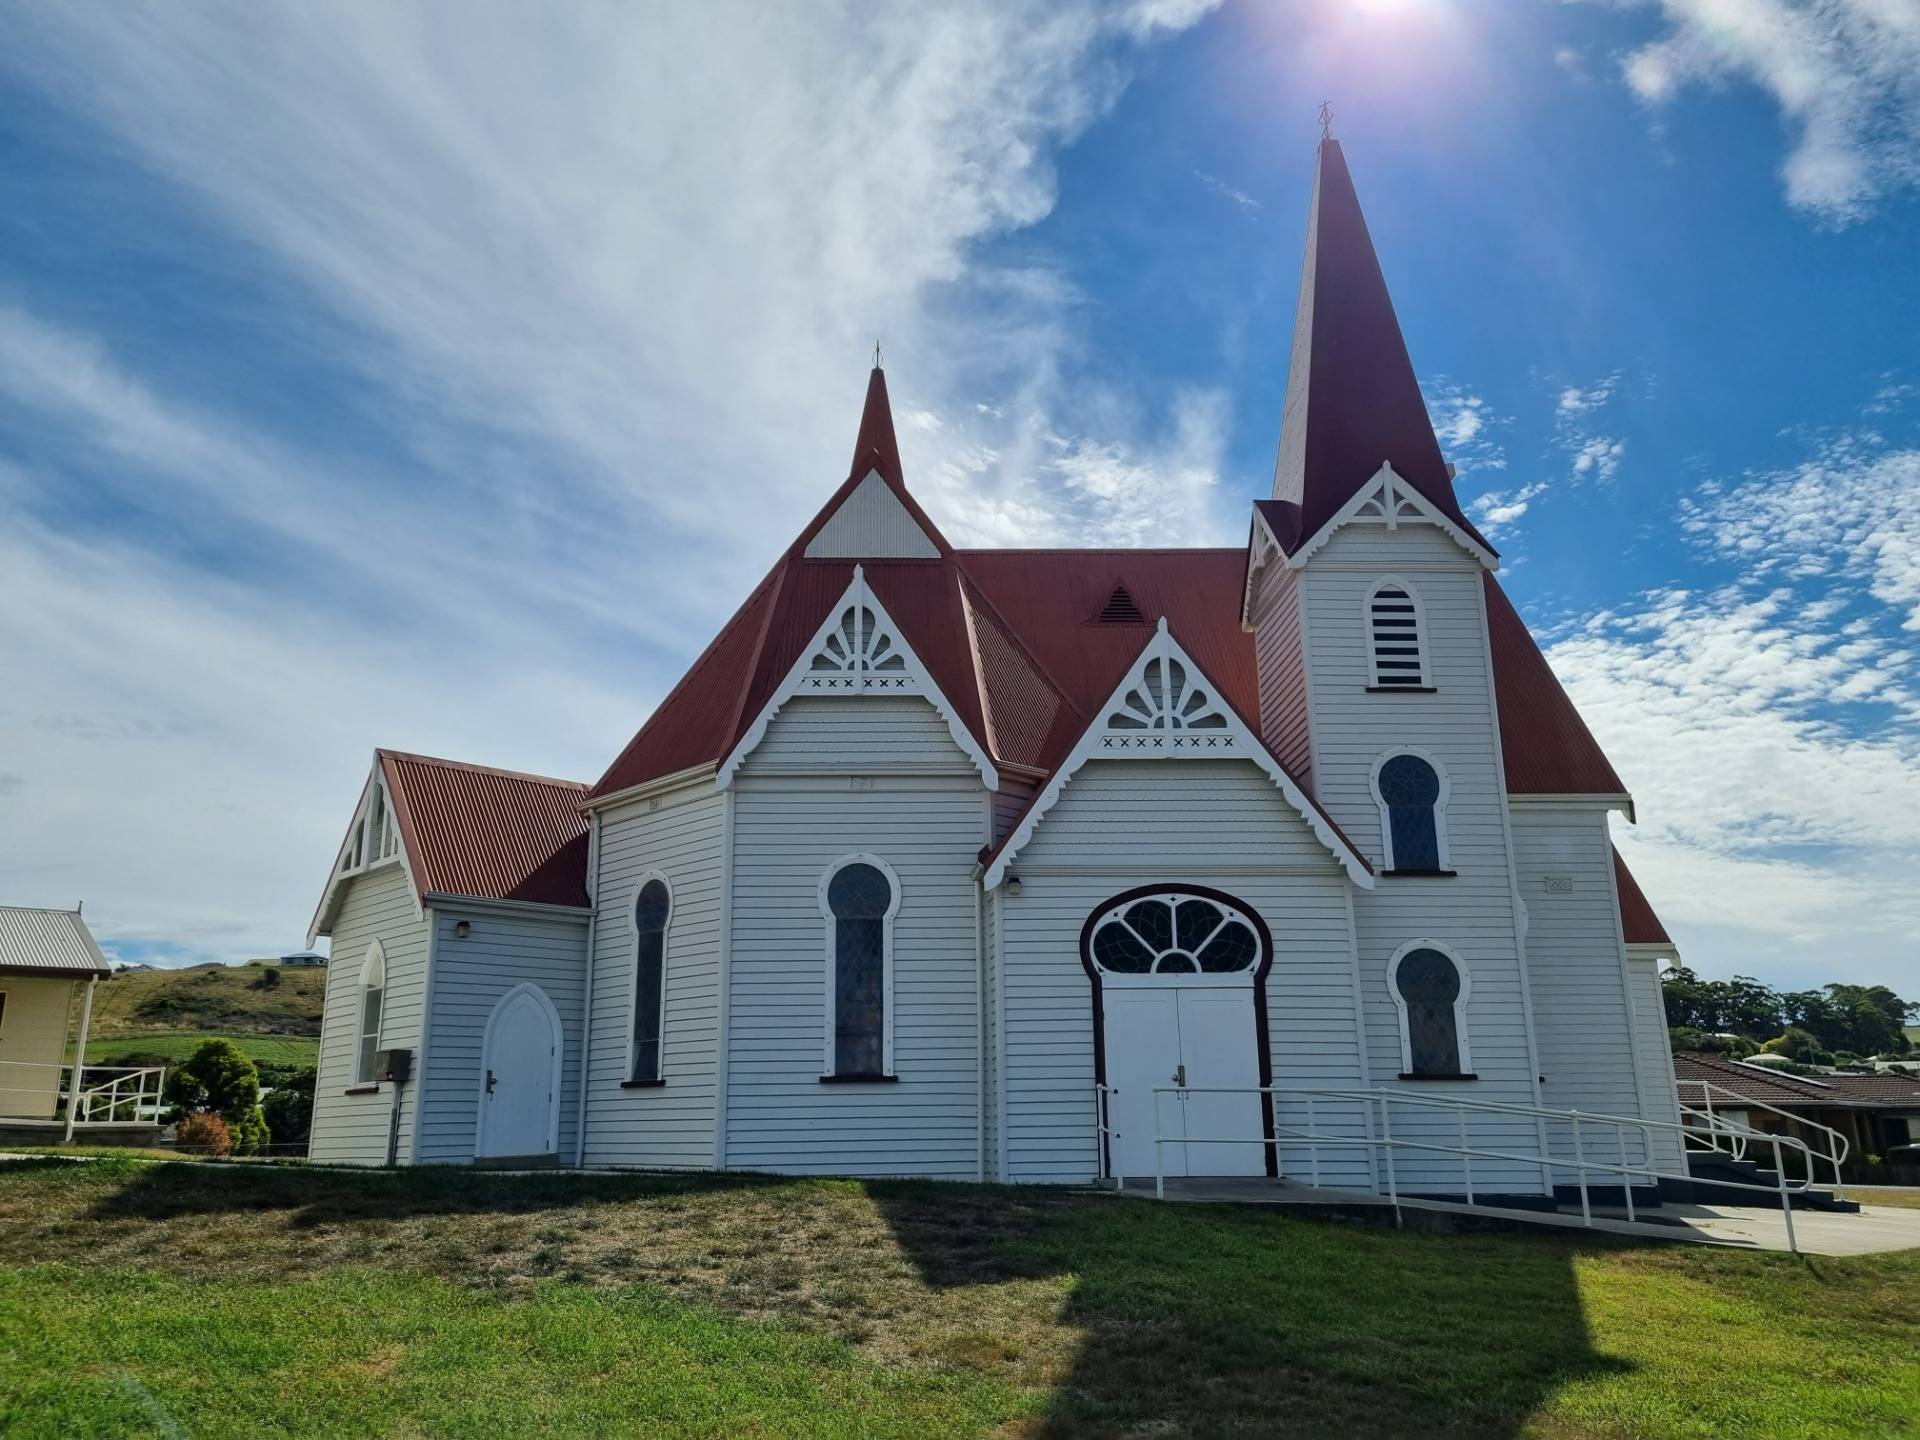 The Uniting Church, built 1903.